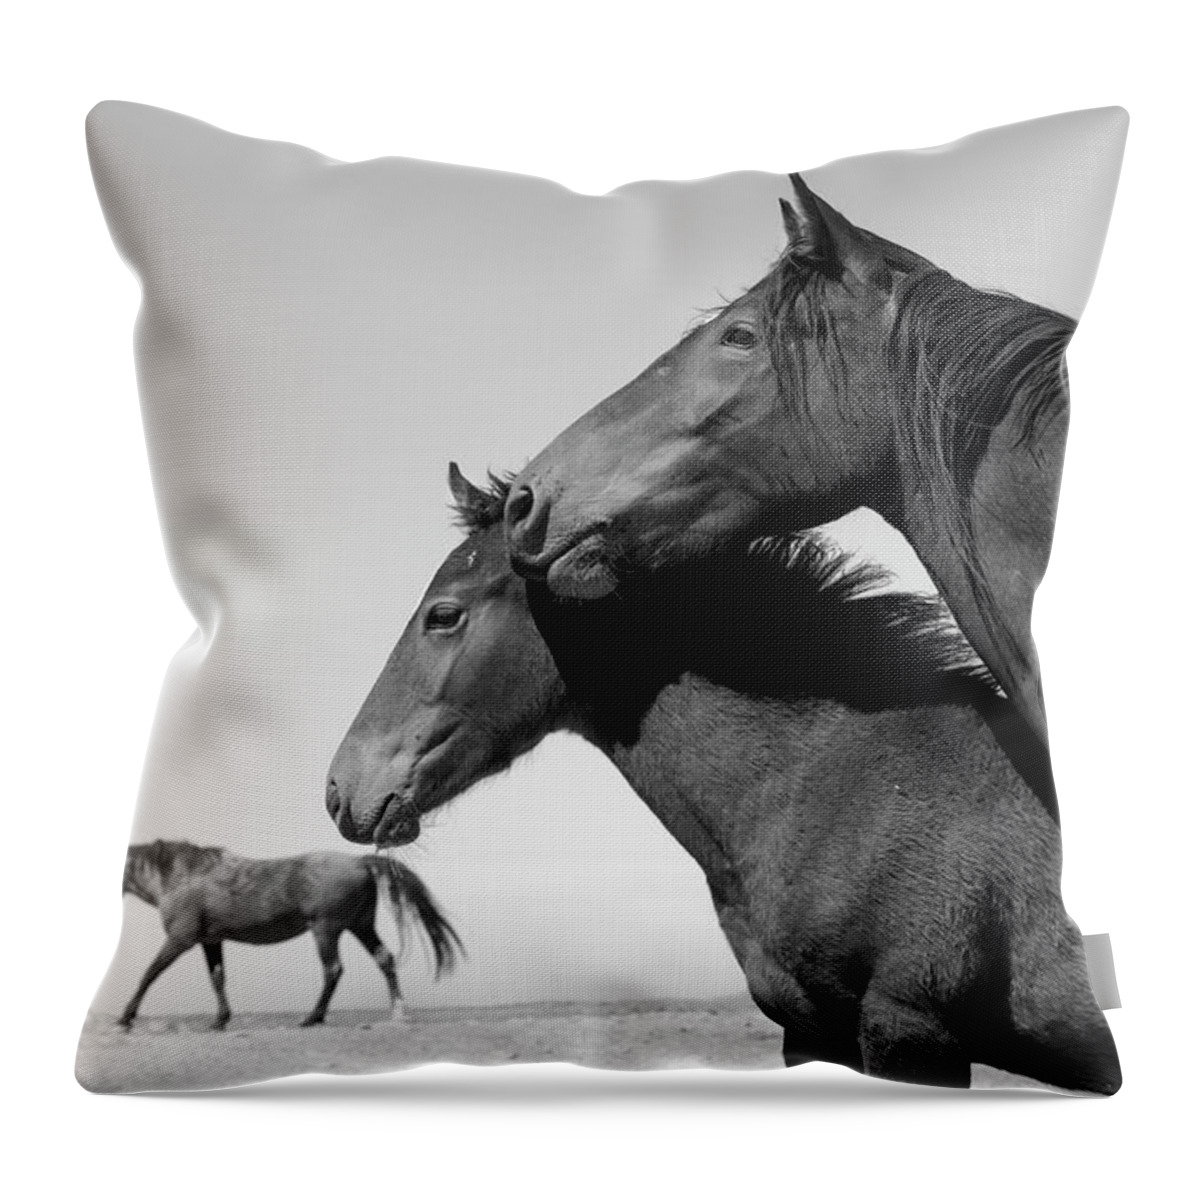 Stallion Throw Pillow featuring the photograph The Desolate Desert. by Paul Martin